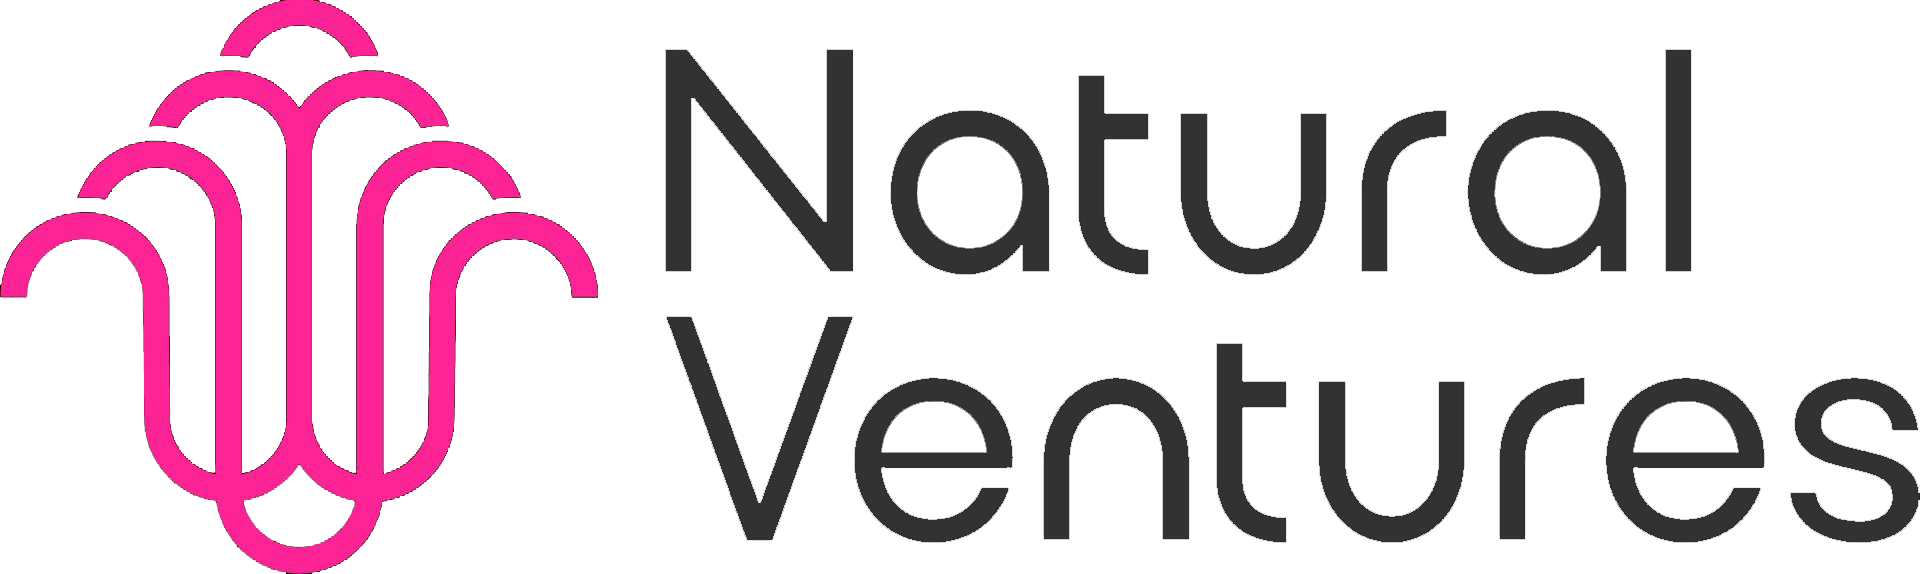 Natural Ventures